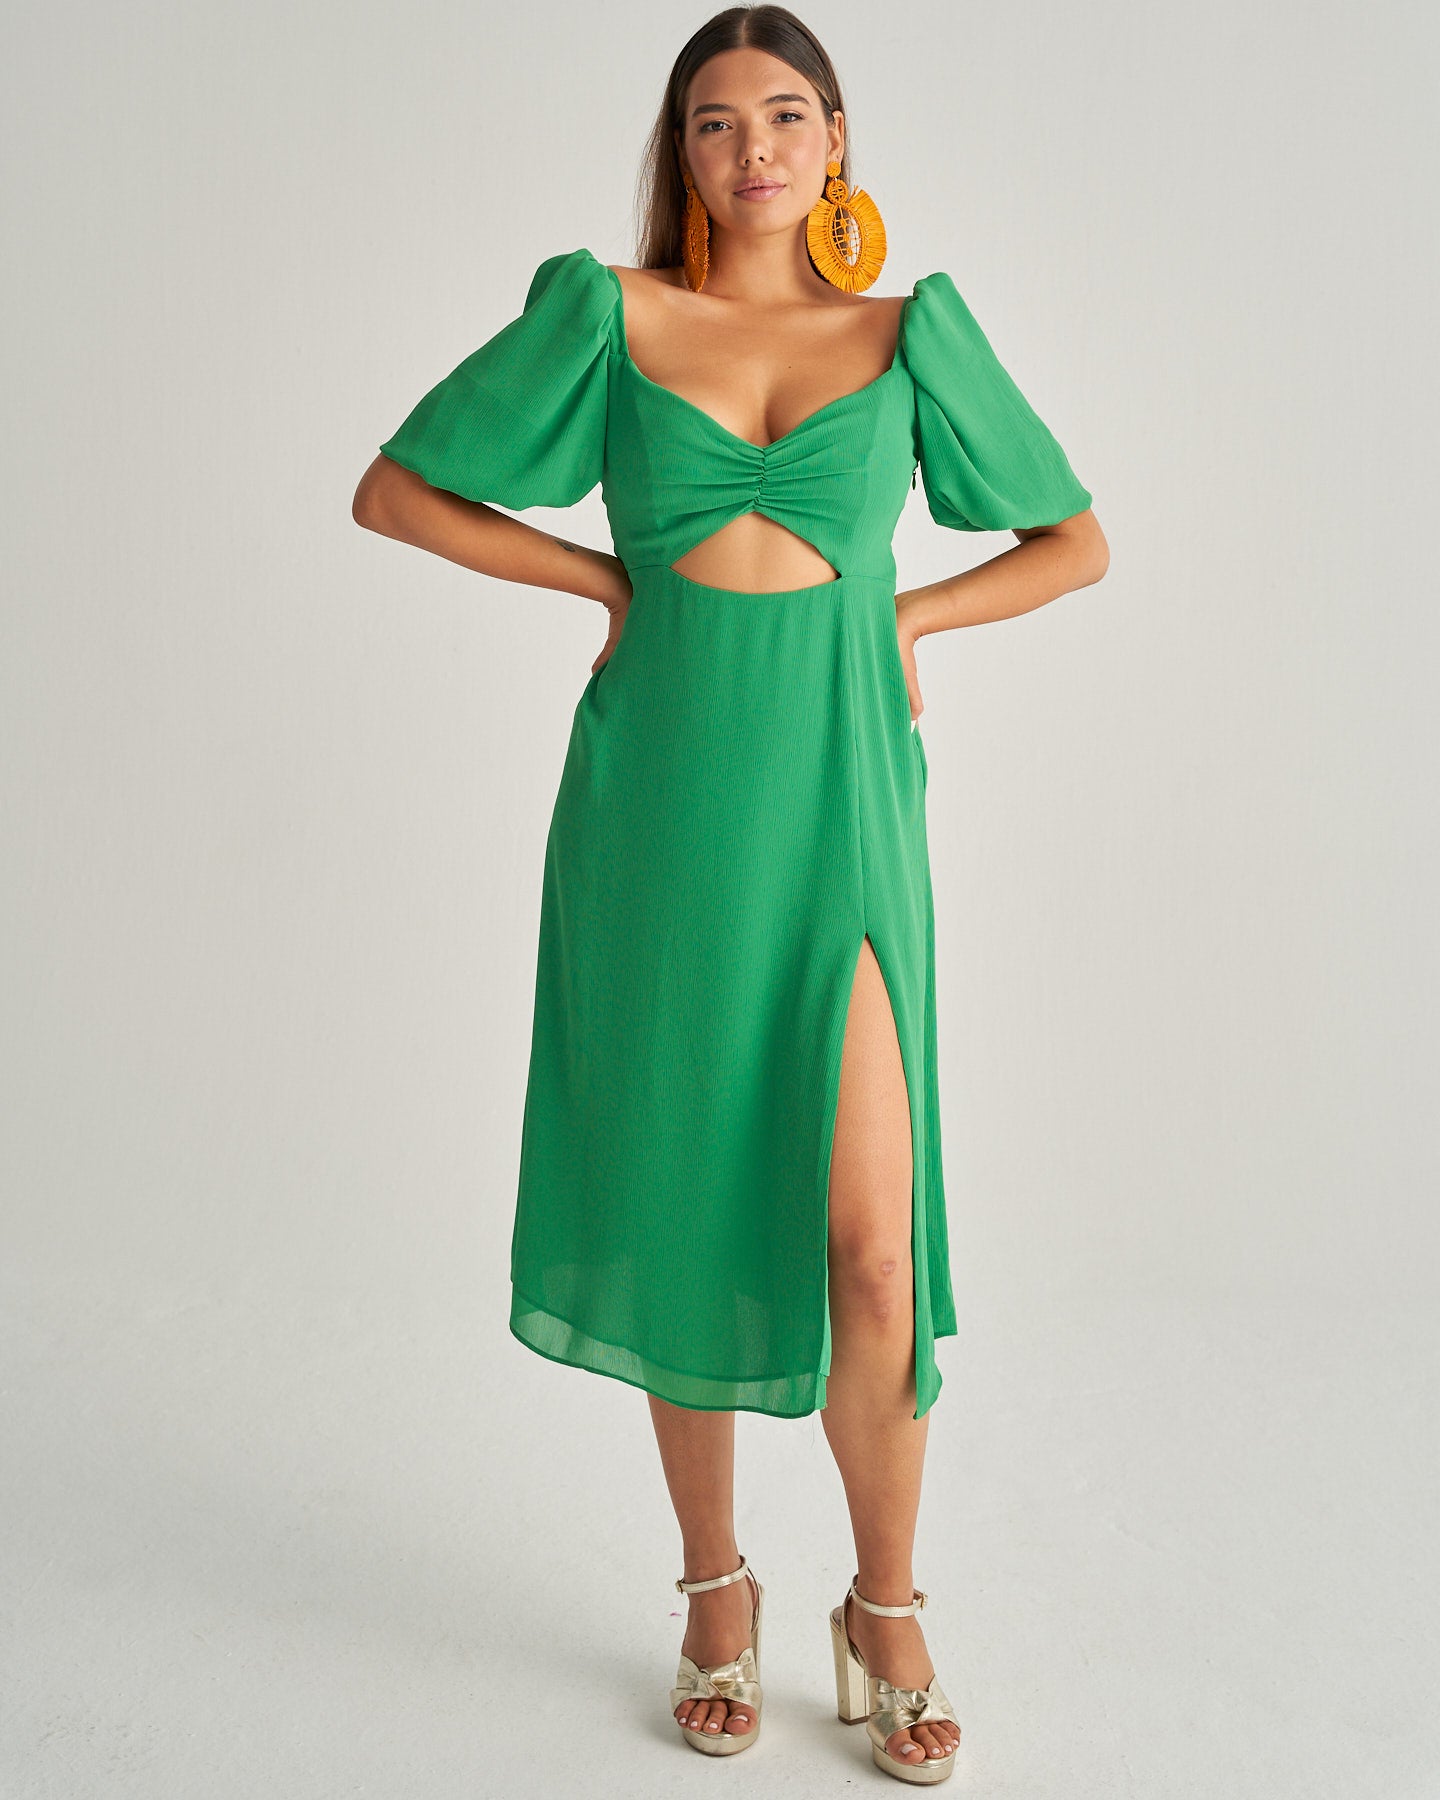 Camila Green Dress